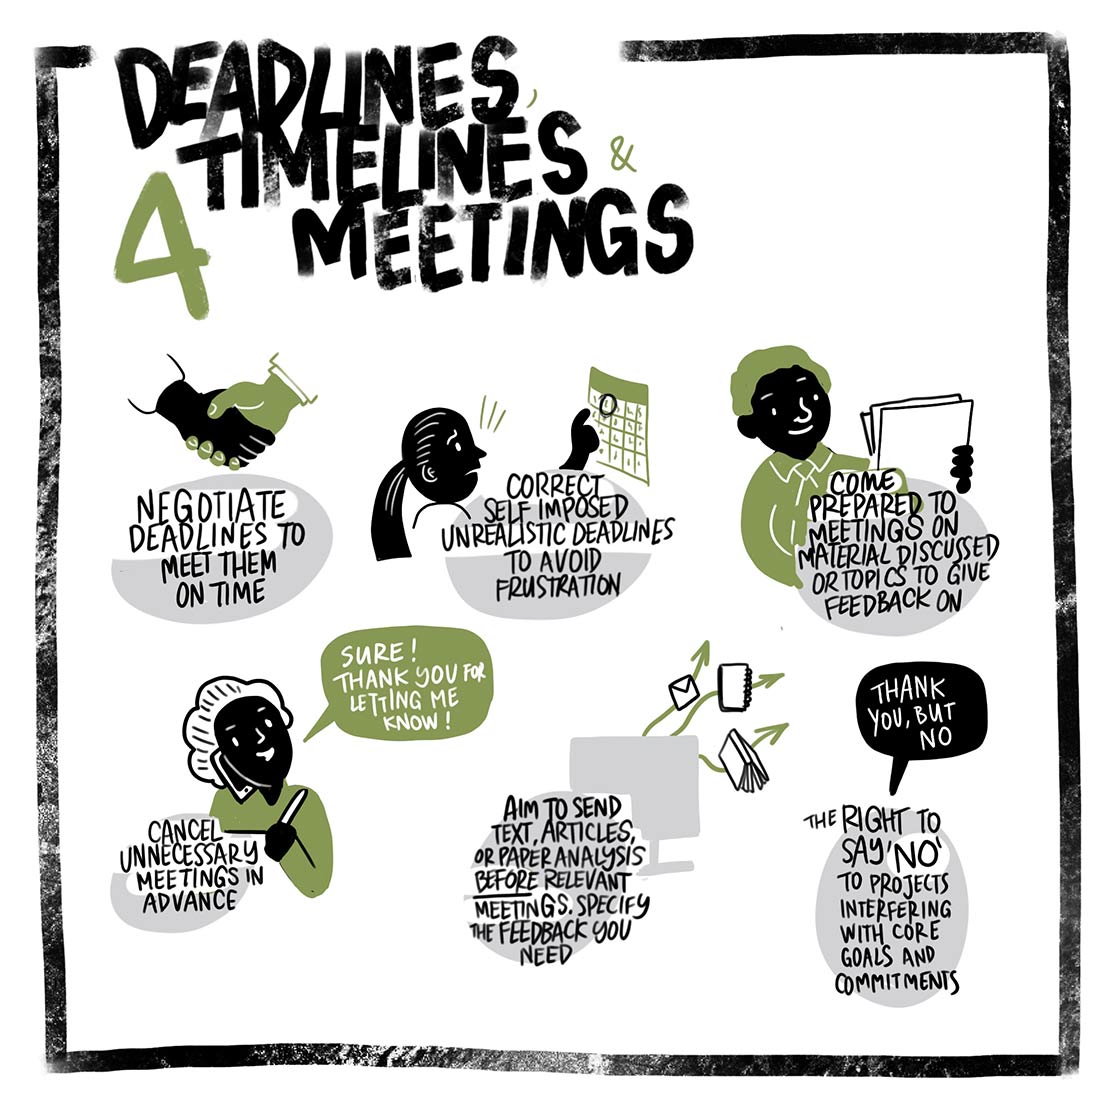 4. Making deadlines and meetings efficient 